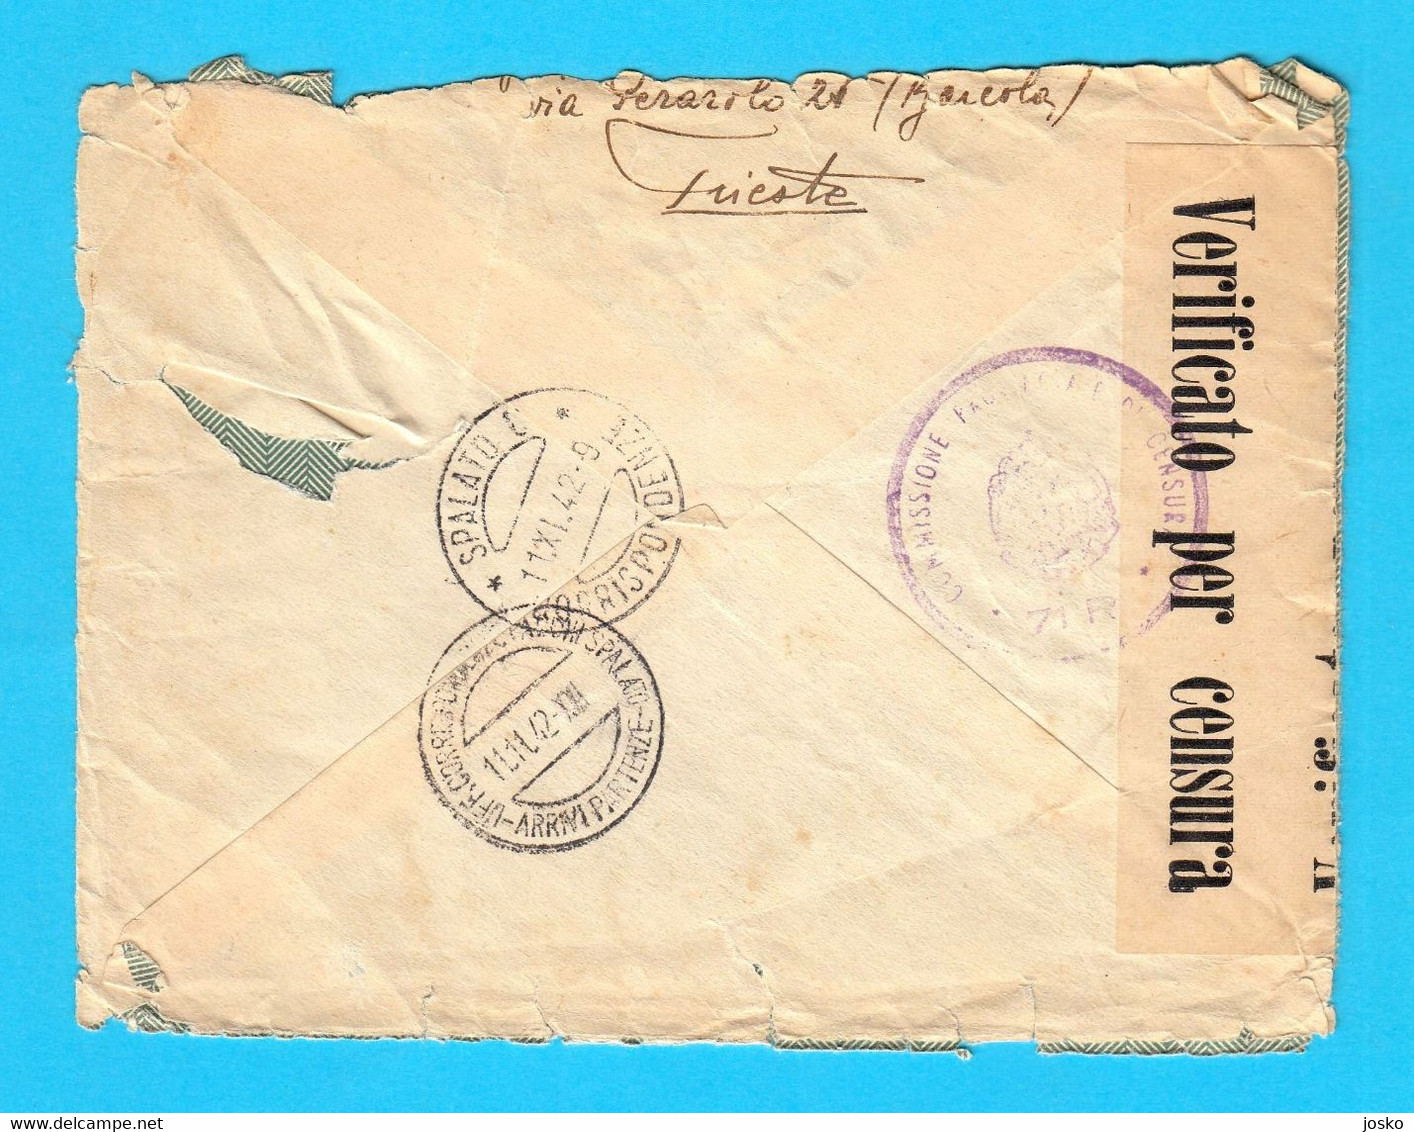 WW2 ... TRIESTE - BARCOLA - Registered Letter (Posta Raccomandata) 1942 Travelled To Spalato - Dalmazia CENSURA CENSURE - Ocu. Croata: Sebenico & Spalato